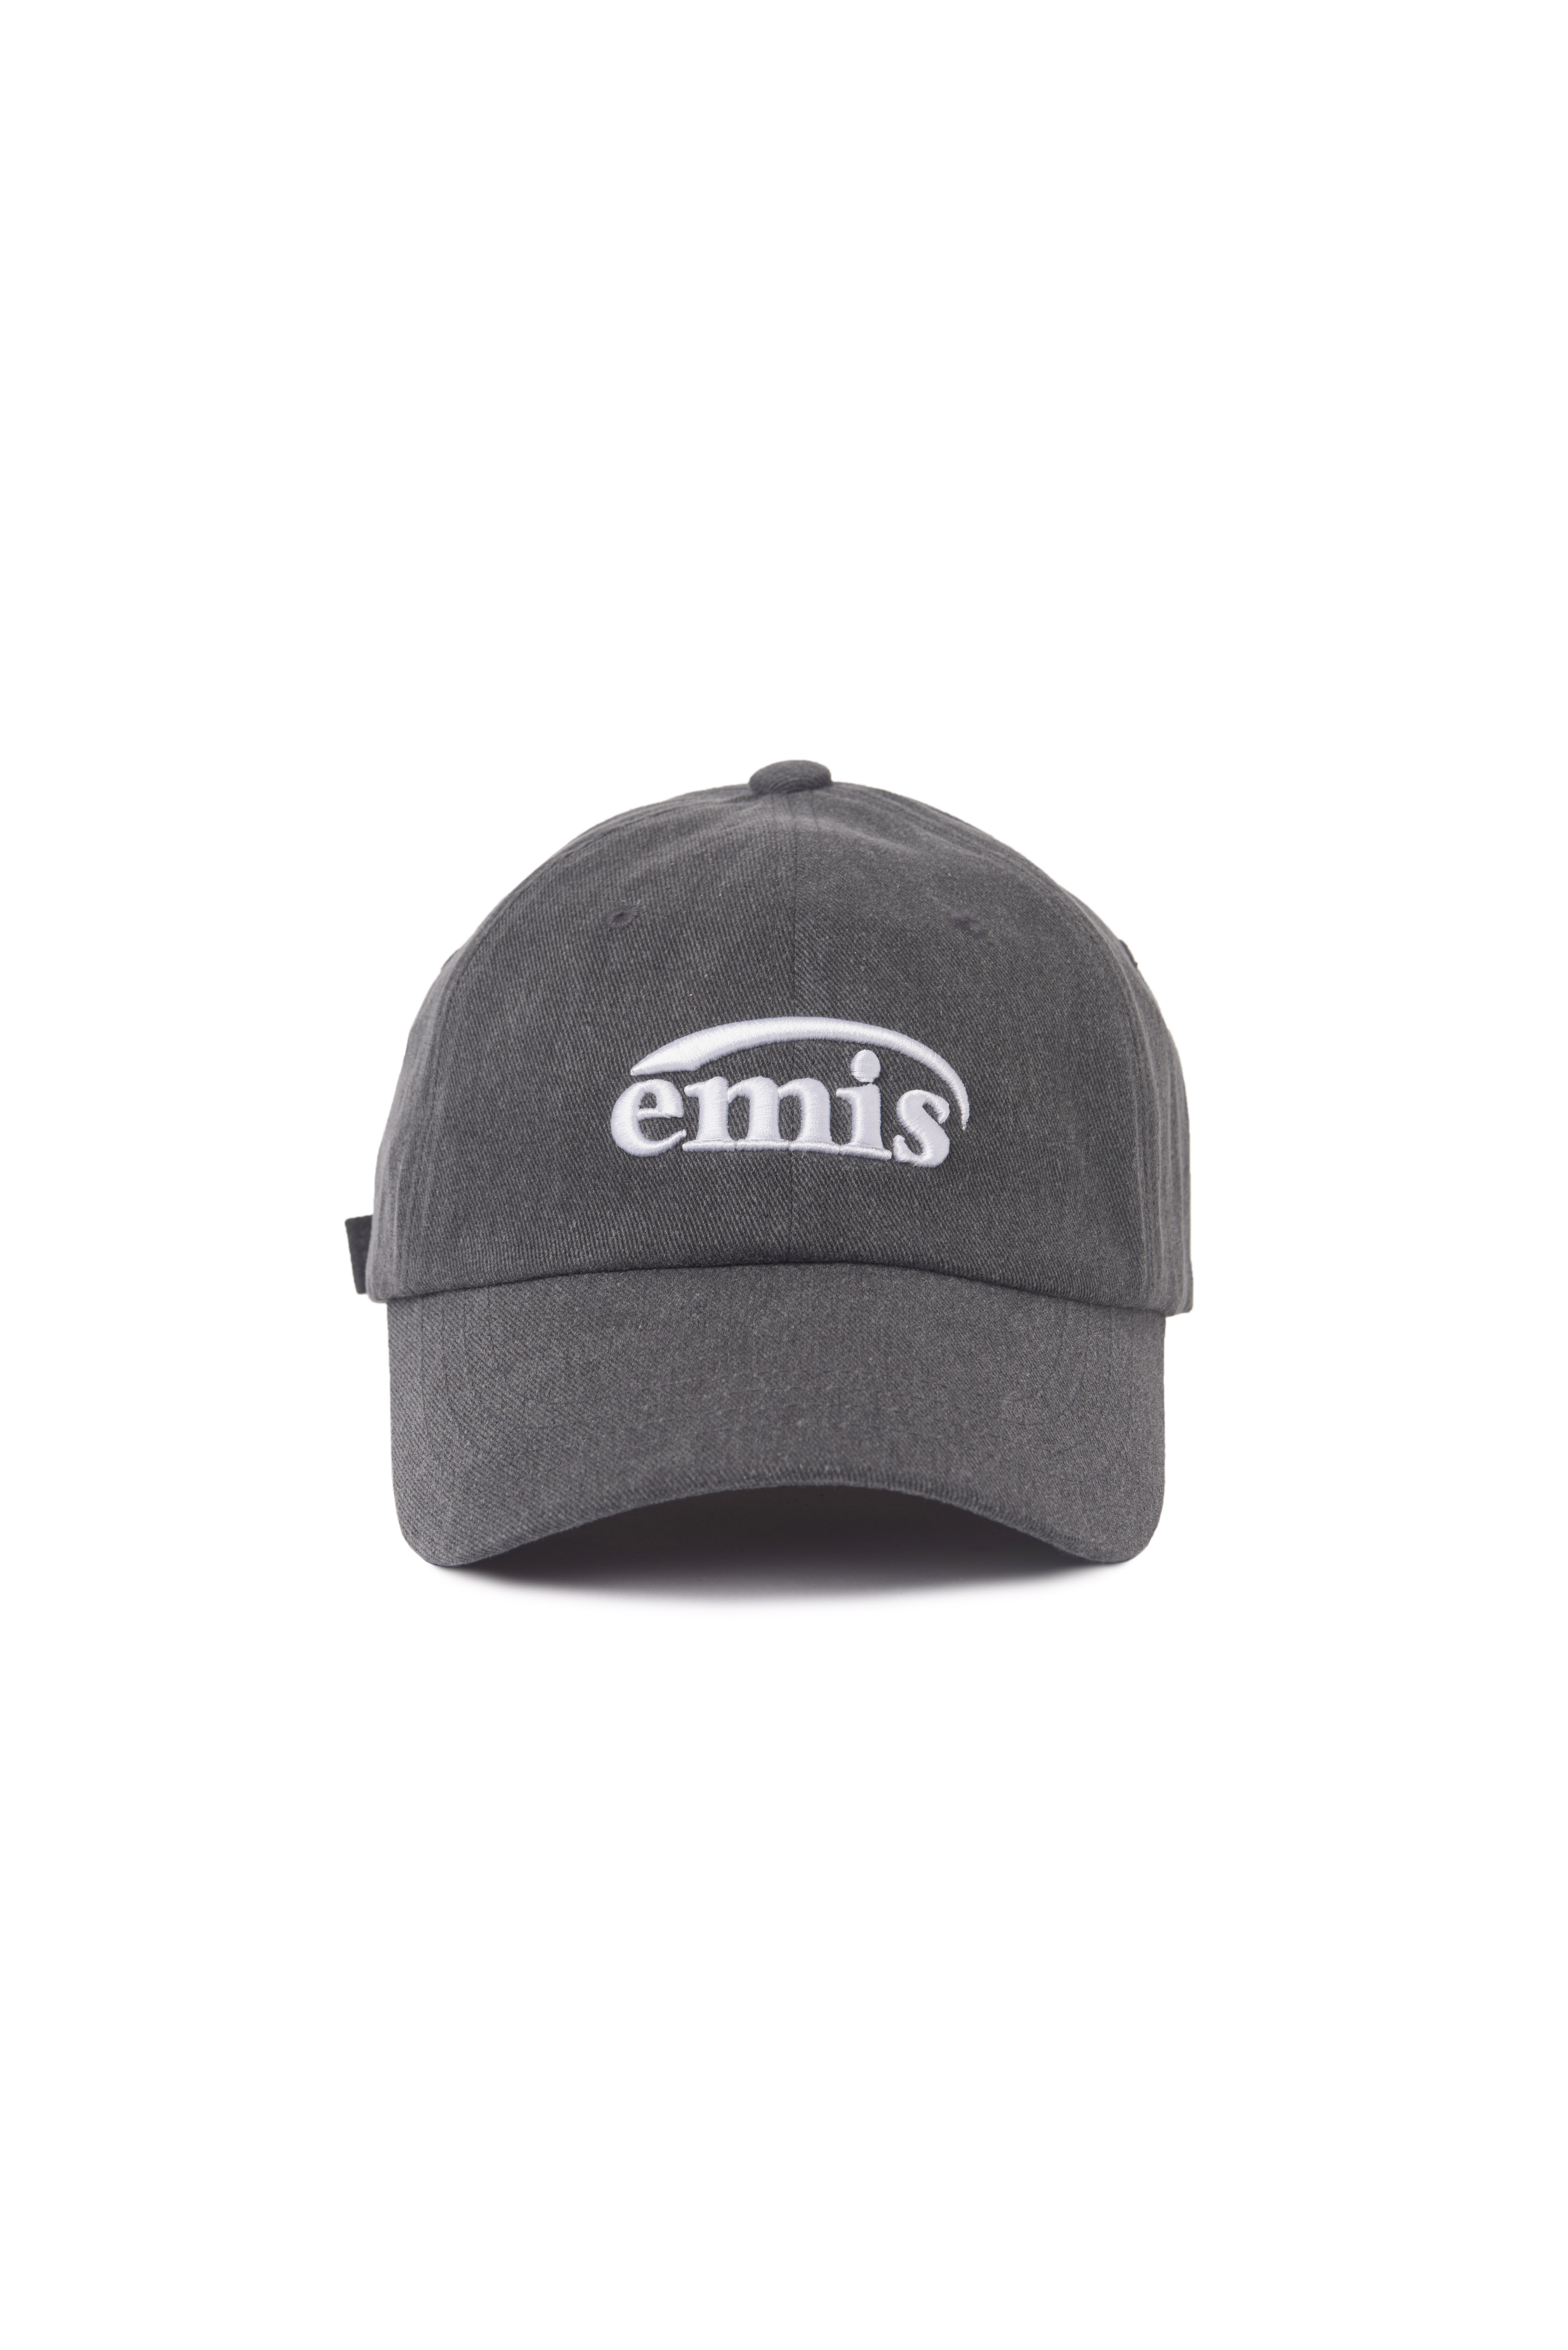 Emis - New Logo Pigment Ball Cap (5 colours)